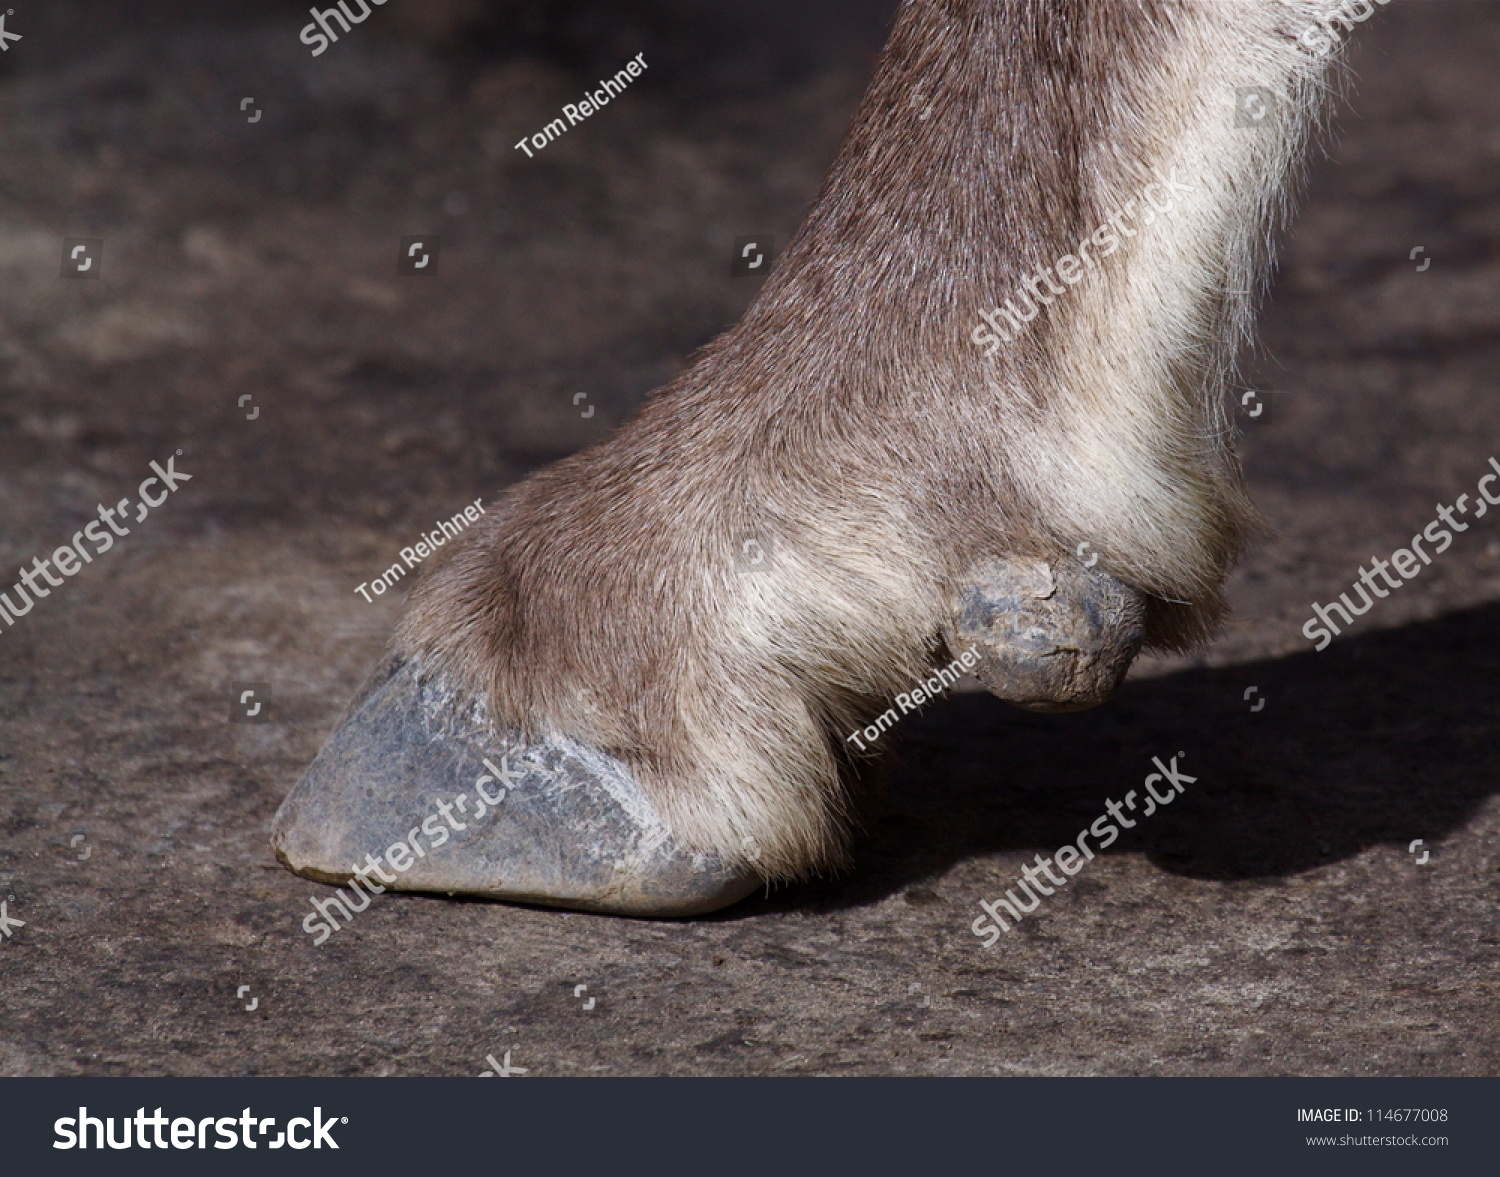 Bighorn Sheep, Close Up Detail Of Hoof / Foot; Rocky Mountain Wild